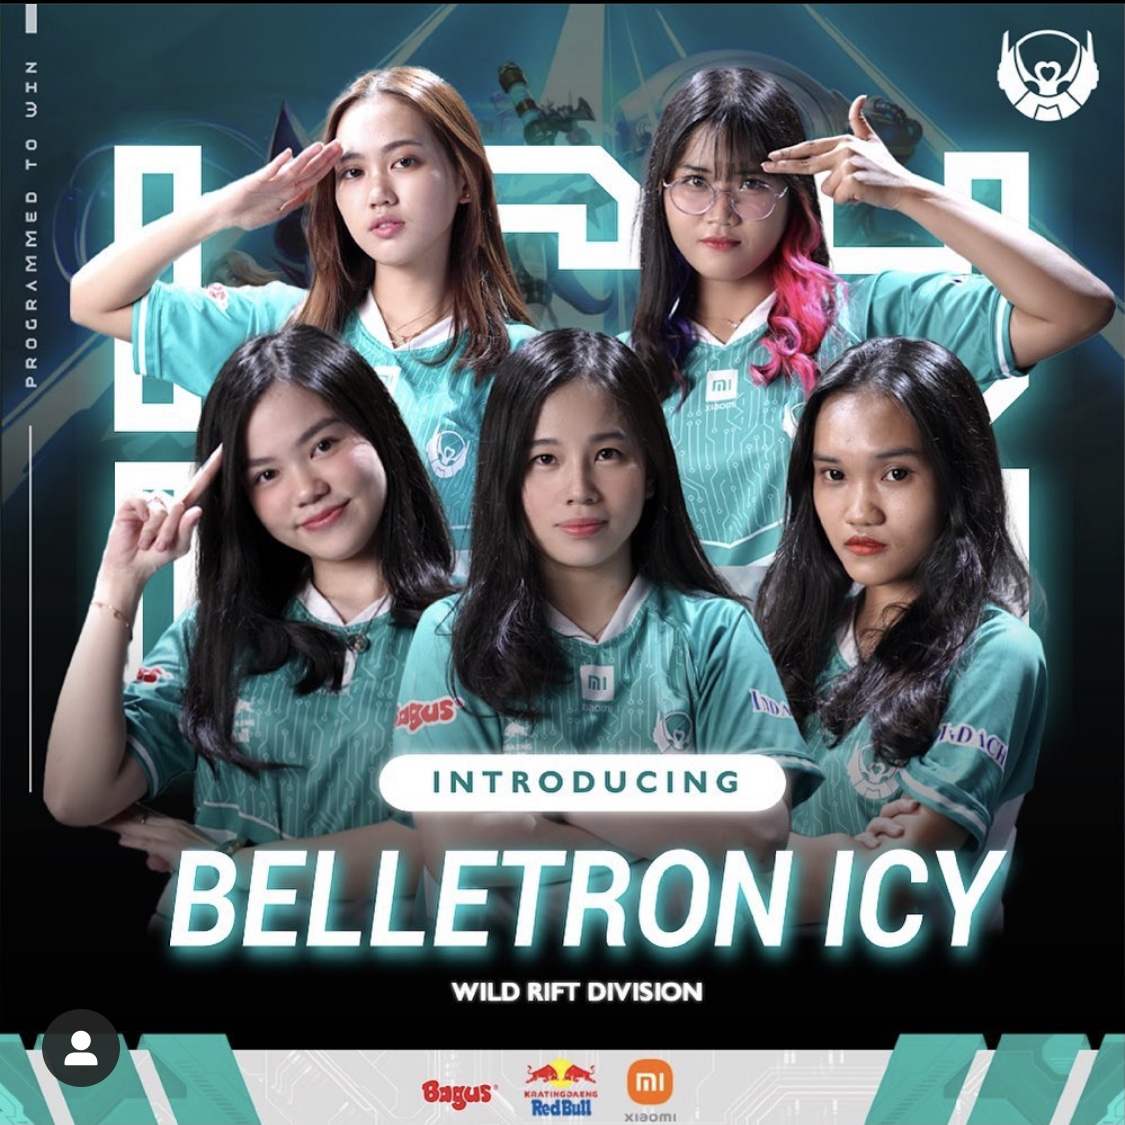 Belletron Esports Kenalkan Roster untuk Divisi Wild Rift, Belletron Icy